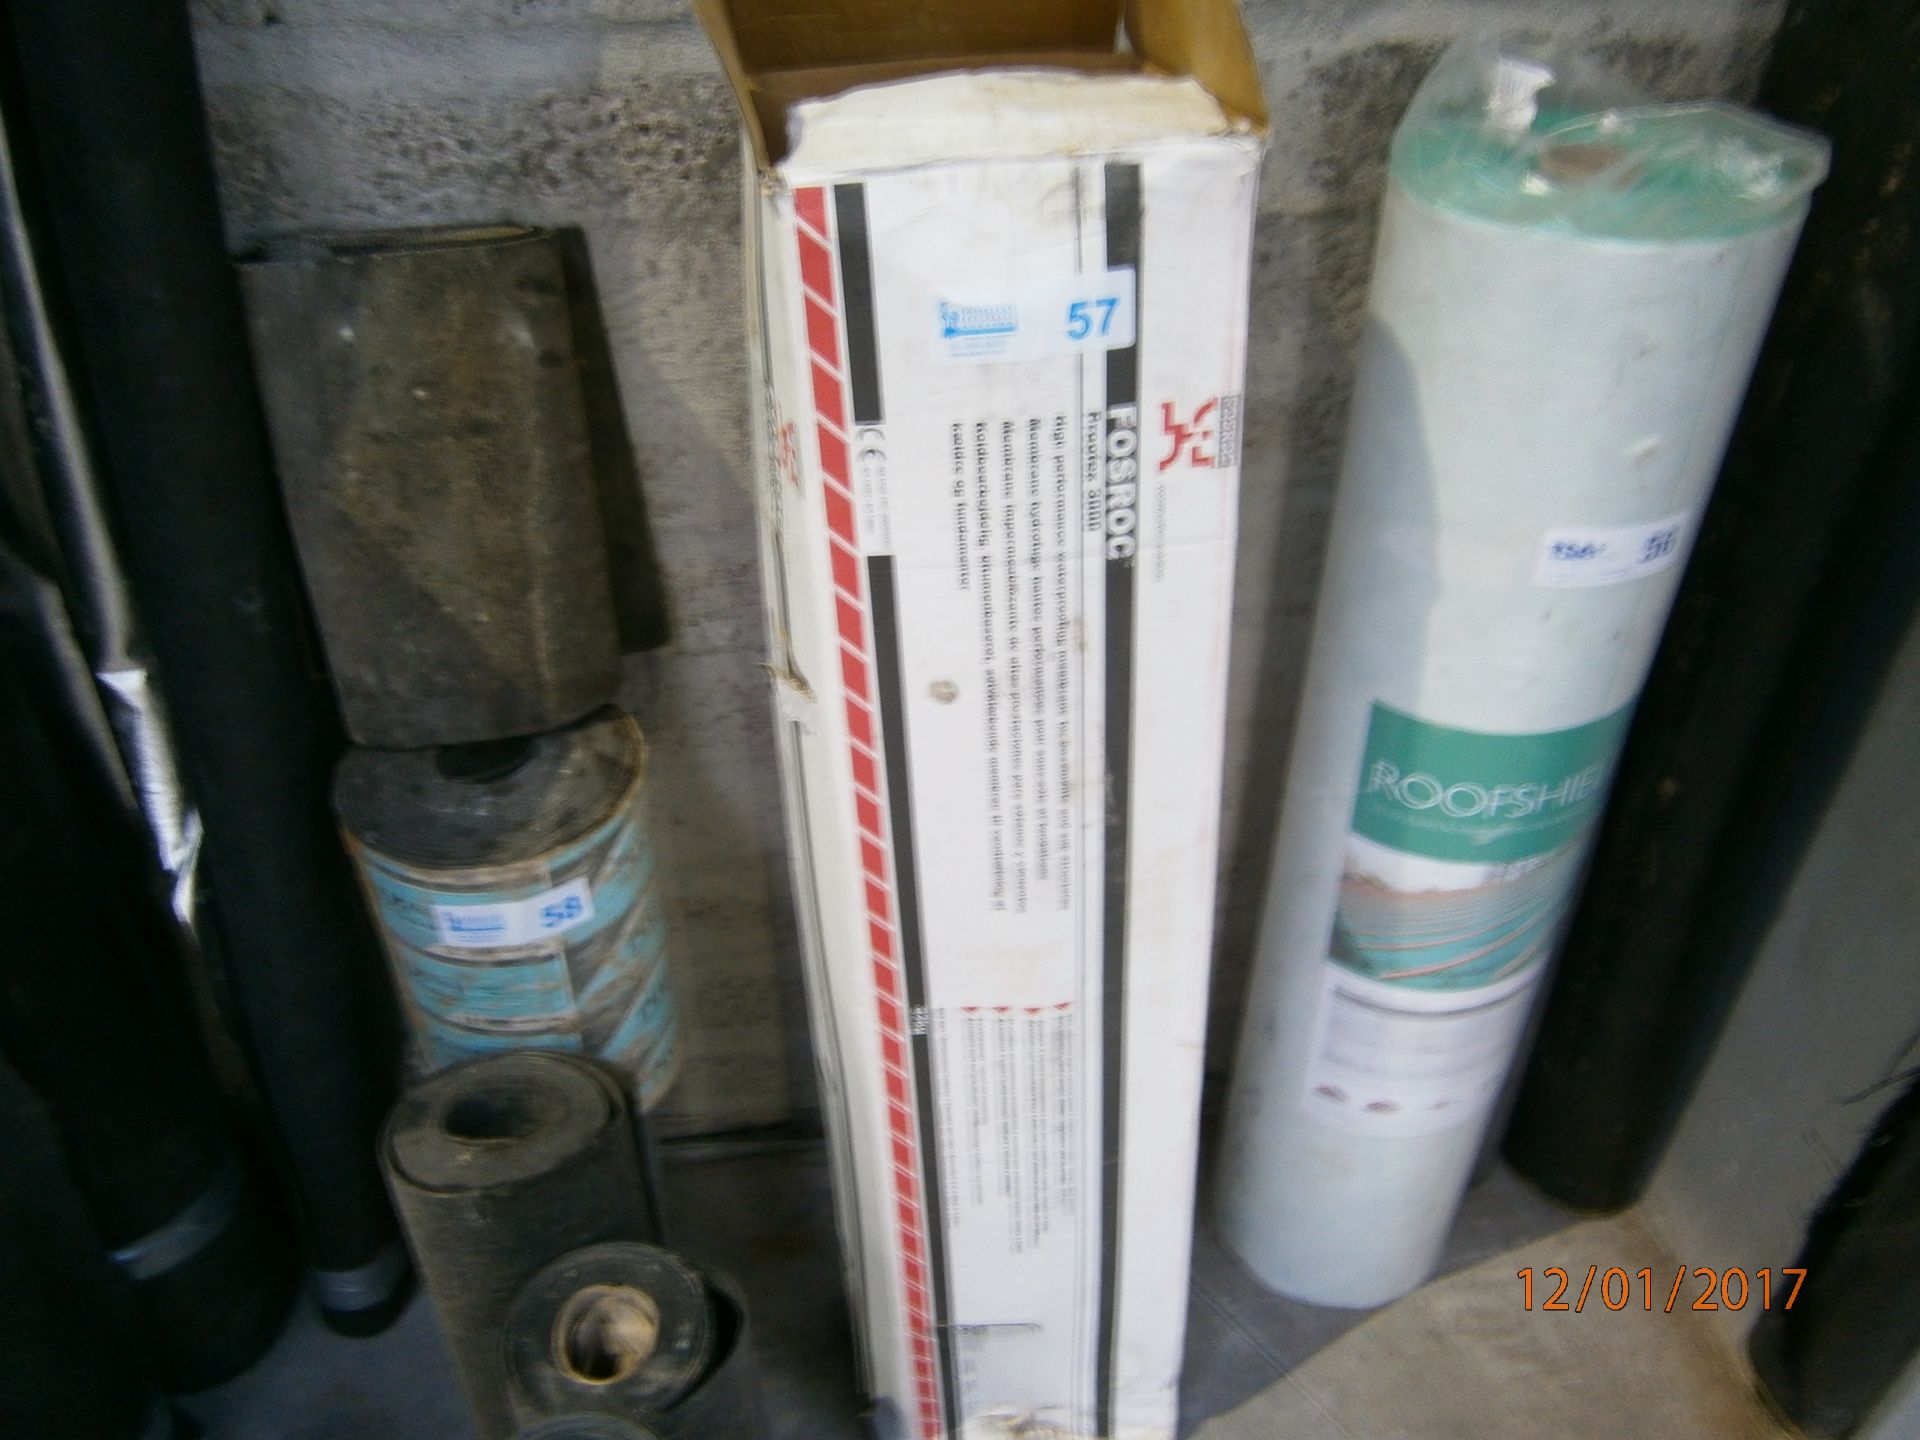 1 No. Roll Fosroc Waterproofing Membrane